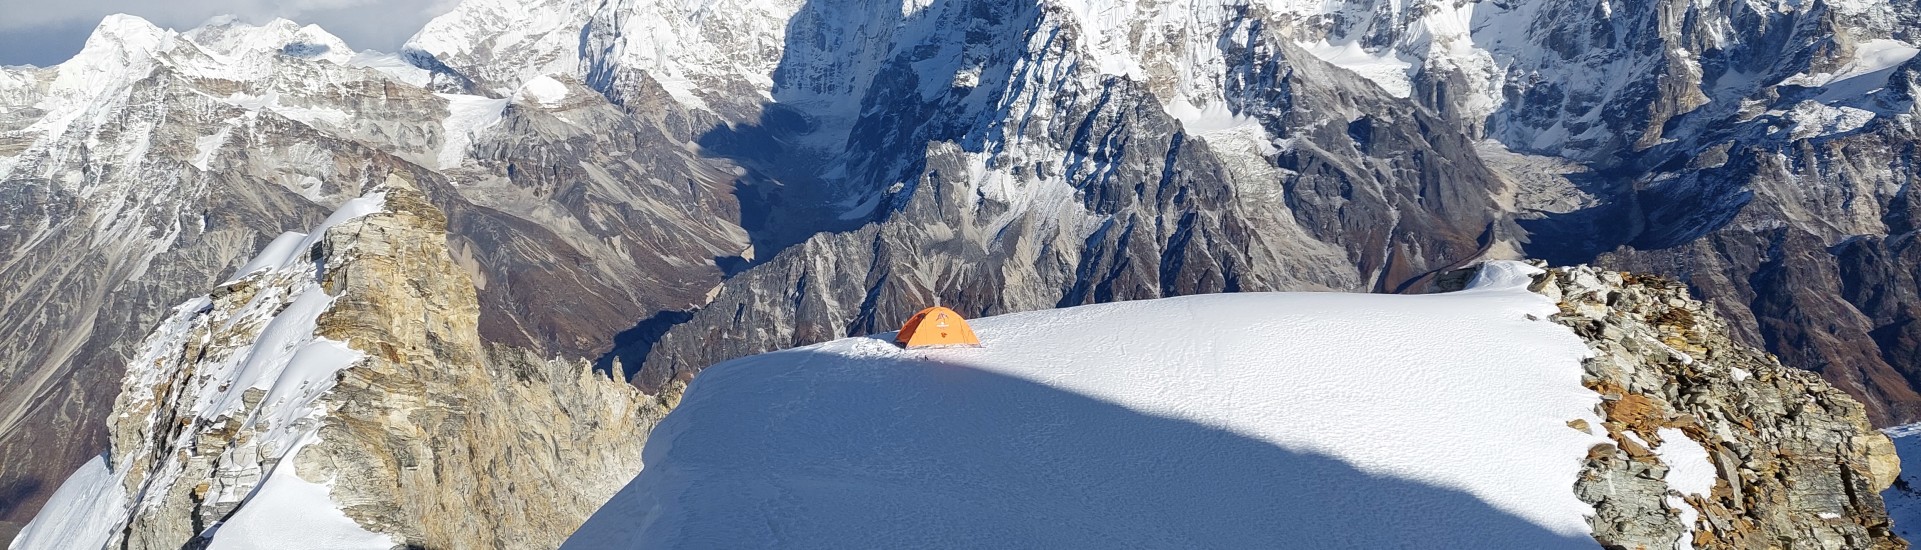 Sato Pyramide: an unclimbed peak in the Himalaya for Silvia Loreggian and Stefano Ragazzo